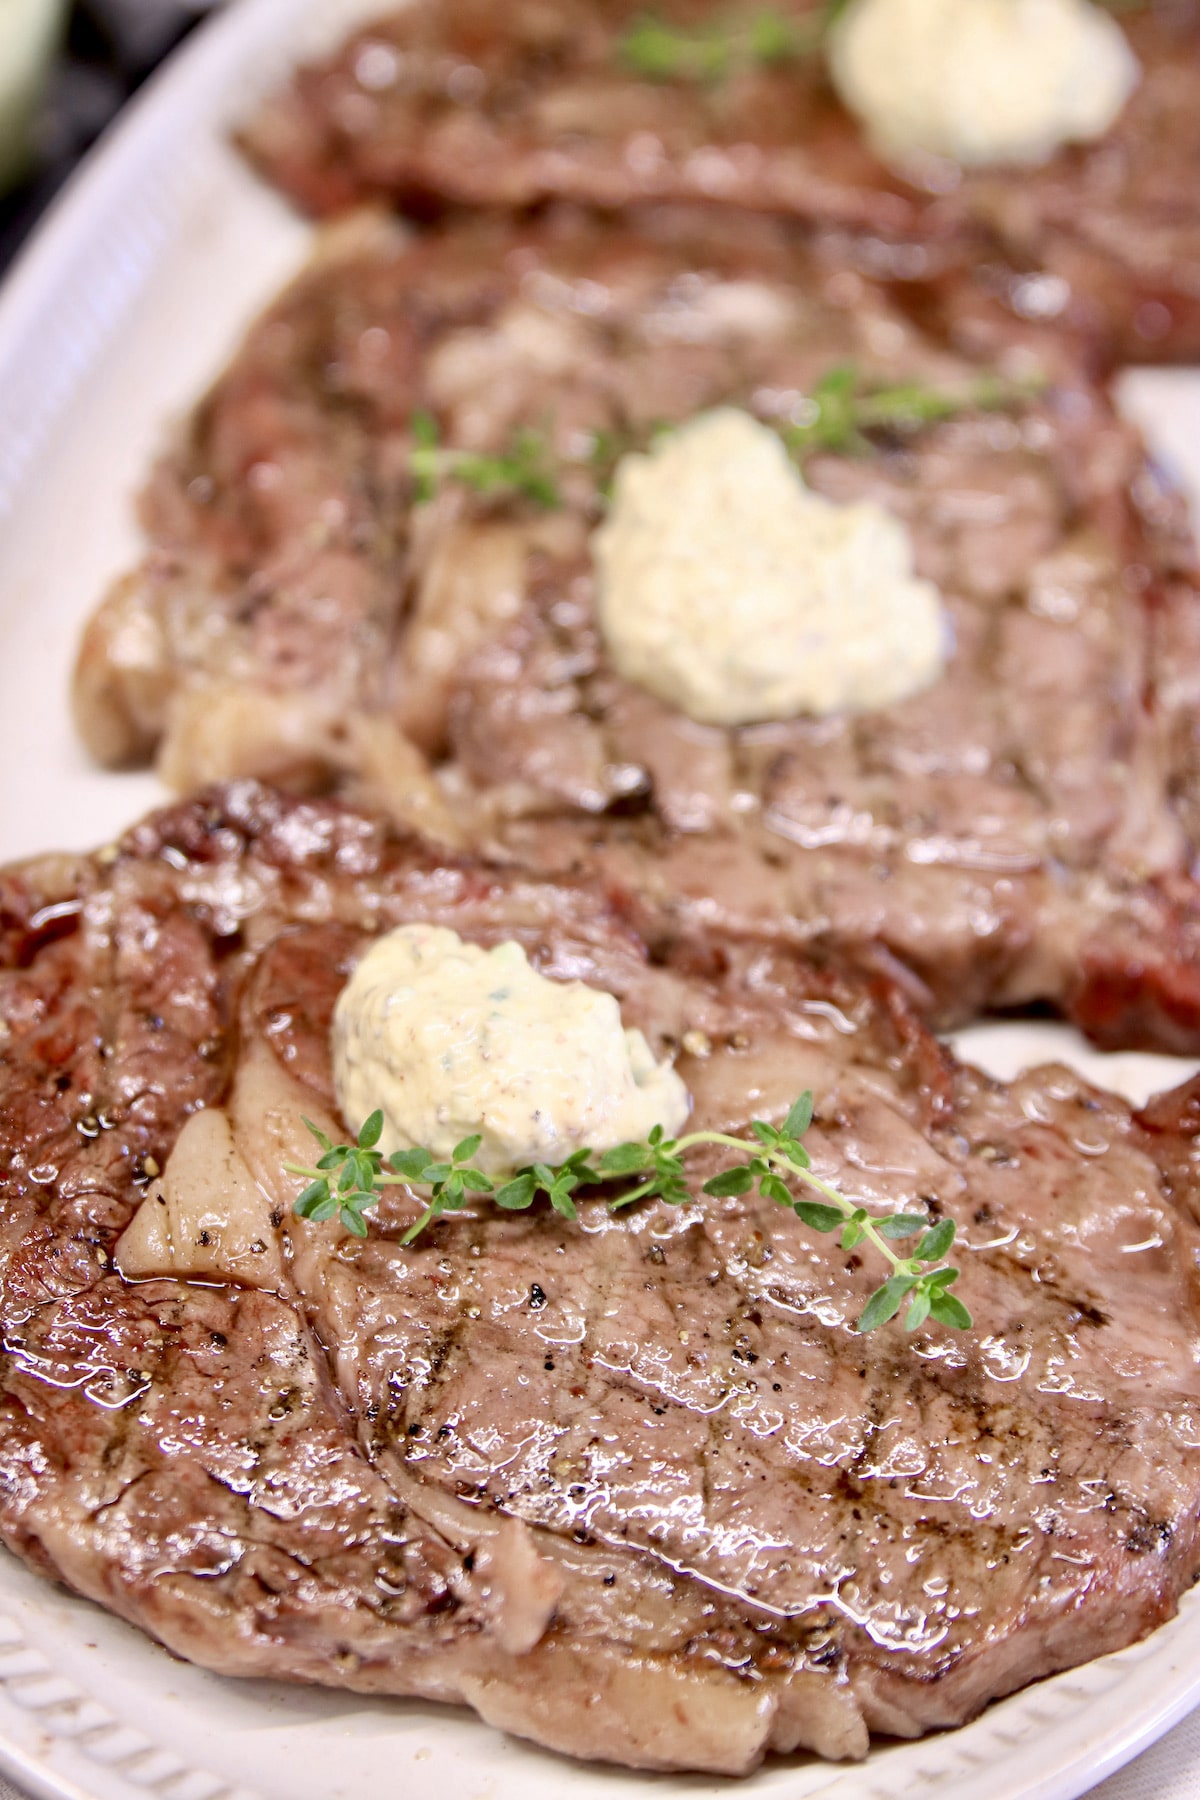 Grilled steaks with garlic cream sauce.